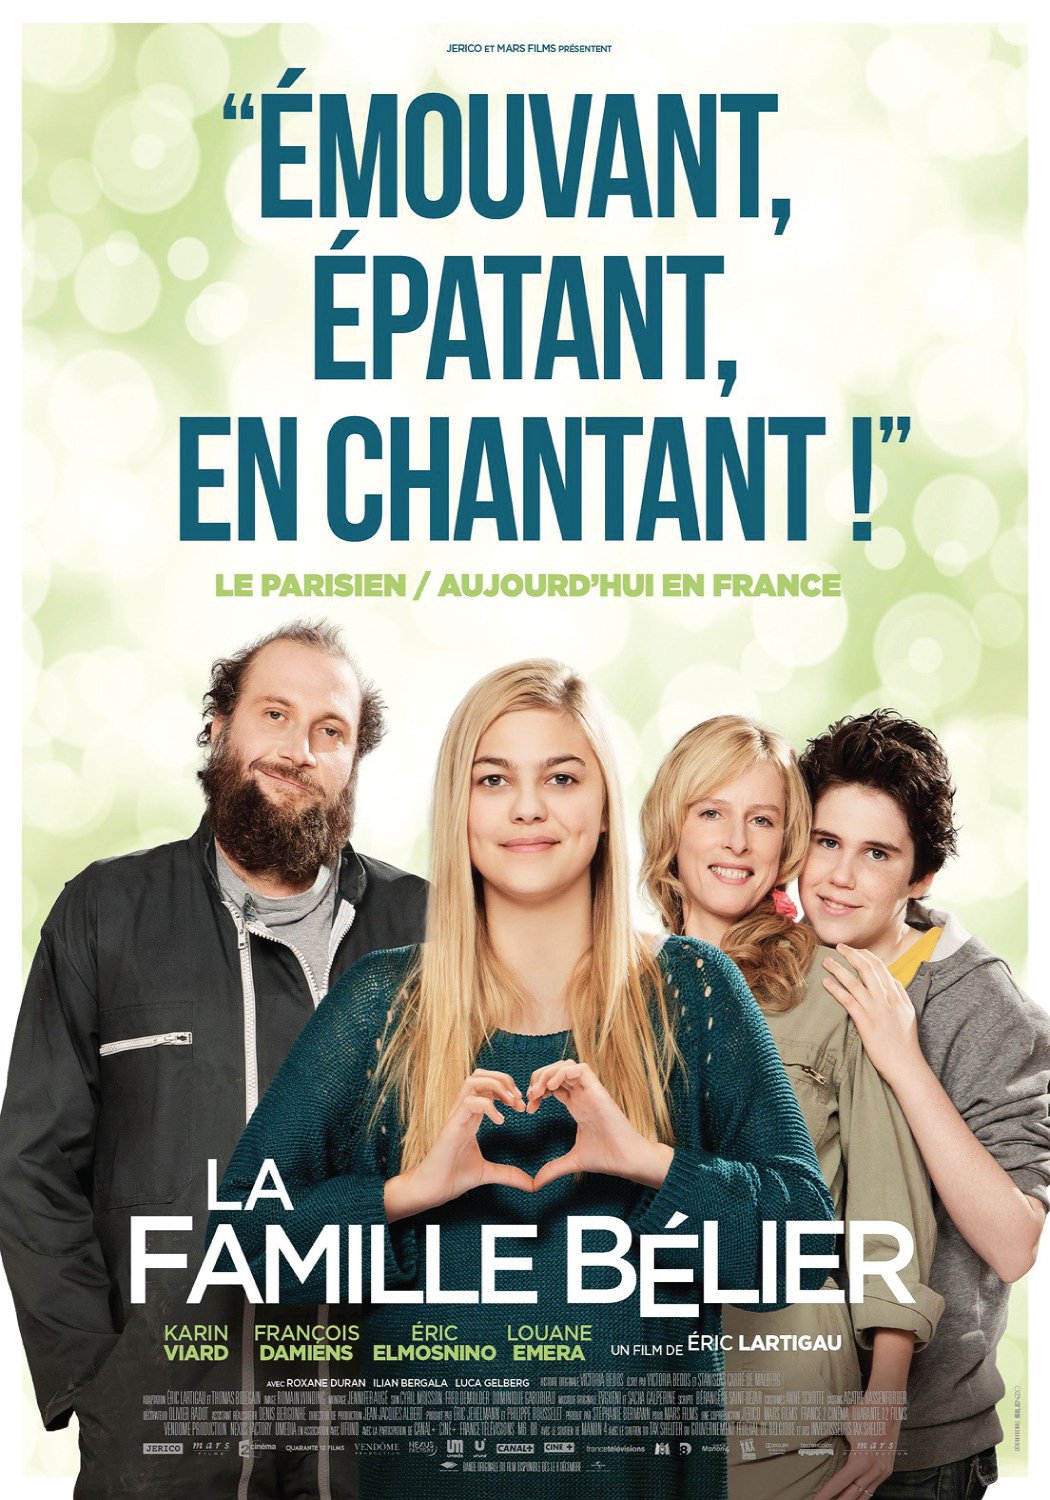 La Famille Belier (2014) ร้องเพลงรัก ให้ก้องโลก ดูหนังออนไลน์ HD